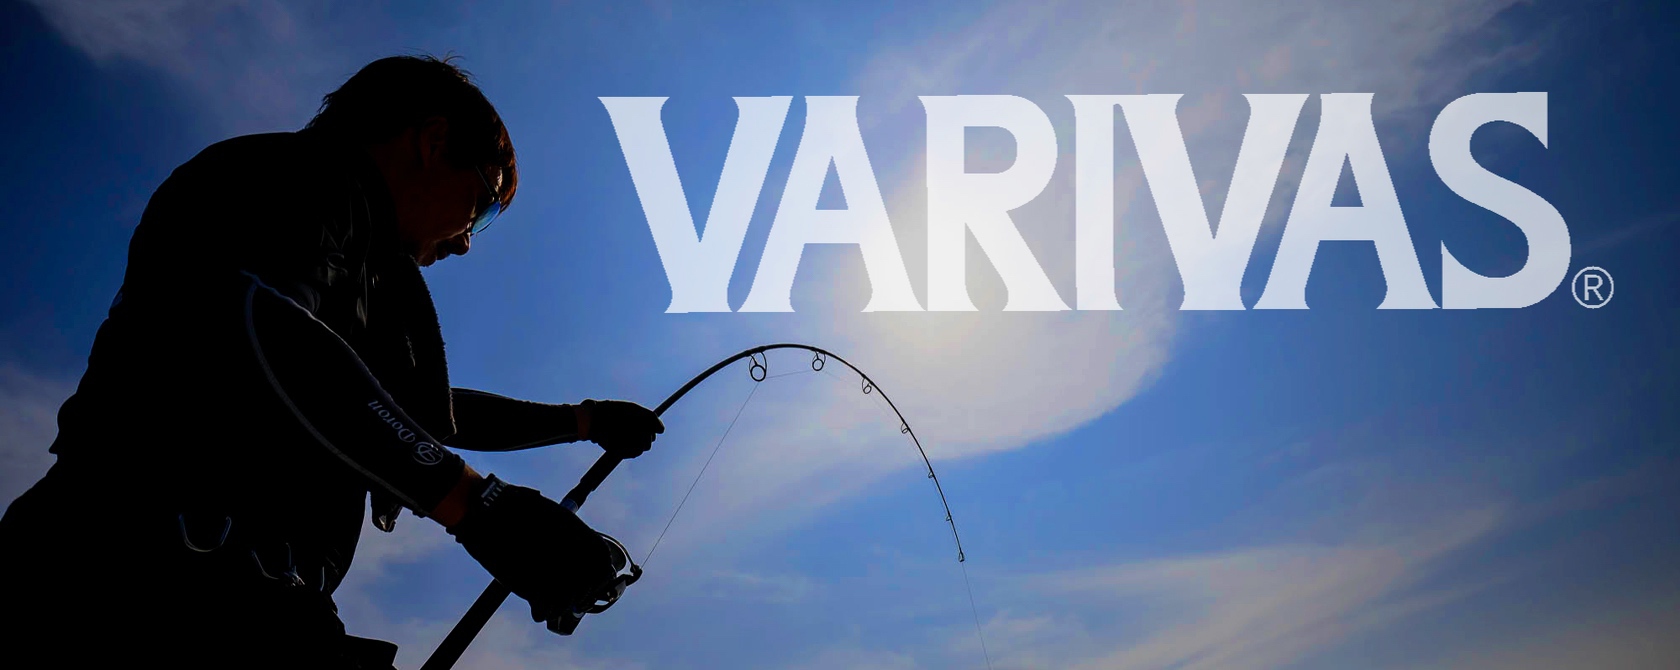 VARIVAS Premium Quality Ultra Light Fishing Nylon Line Standard